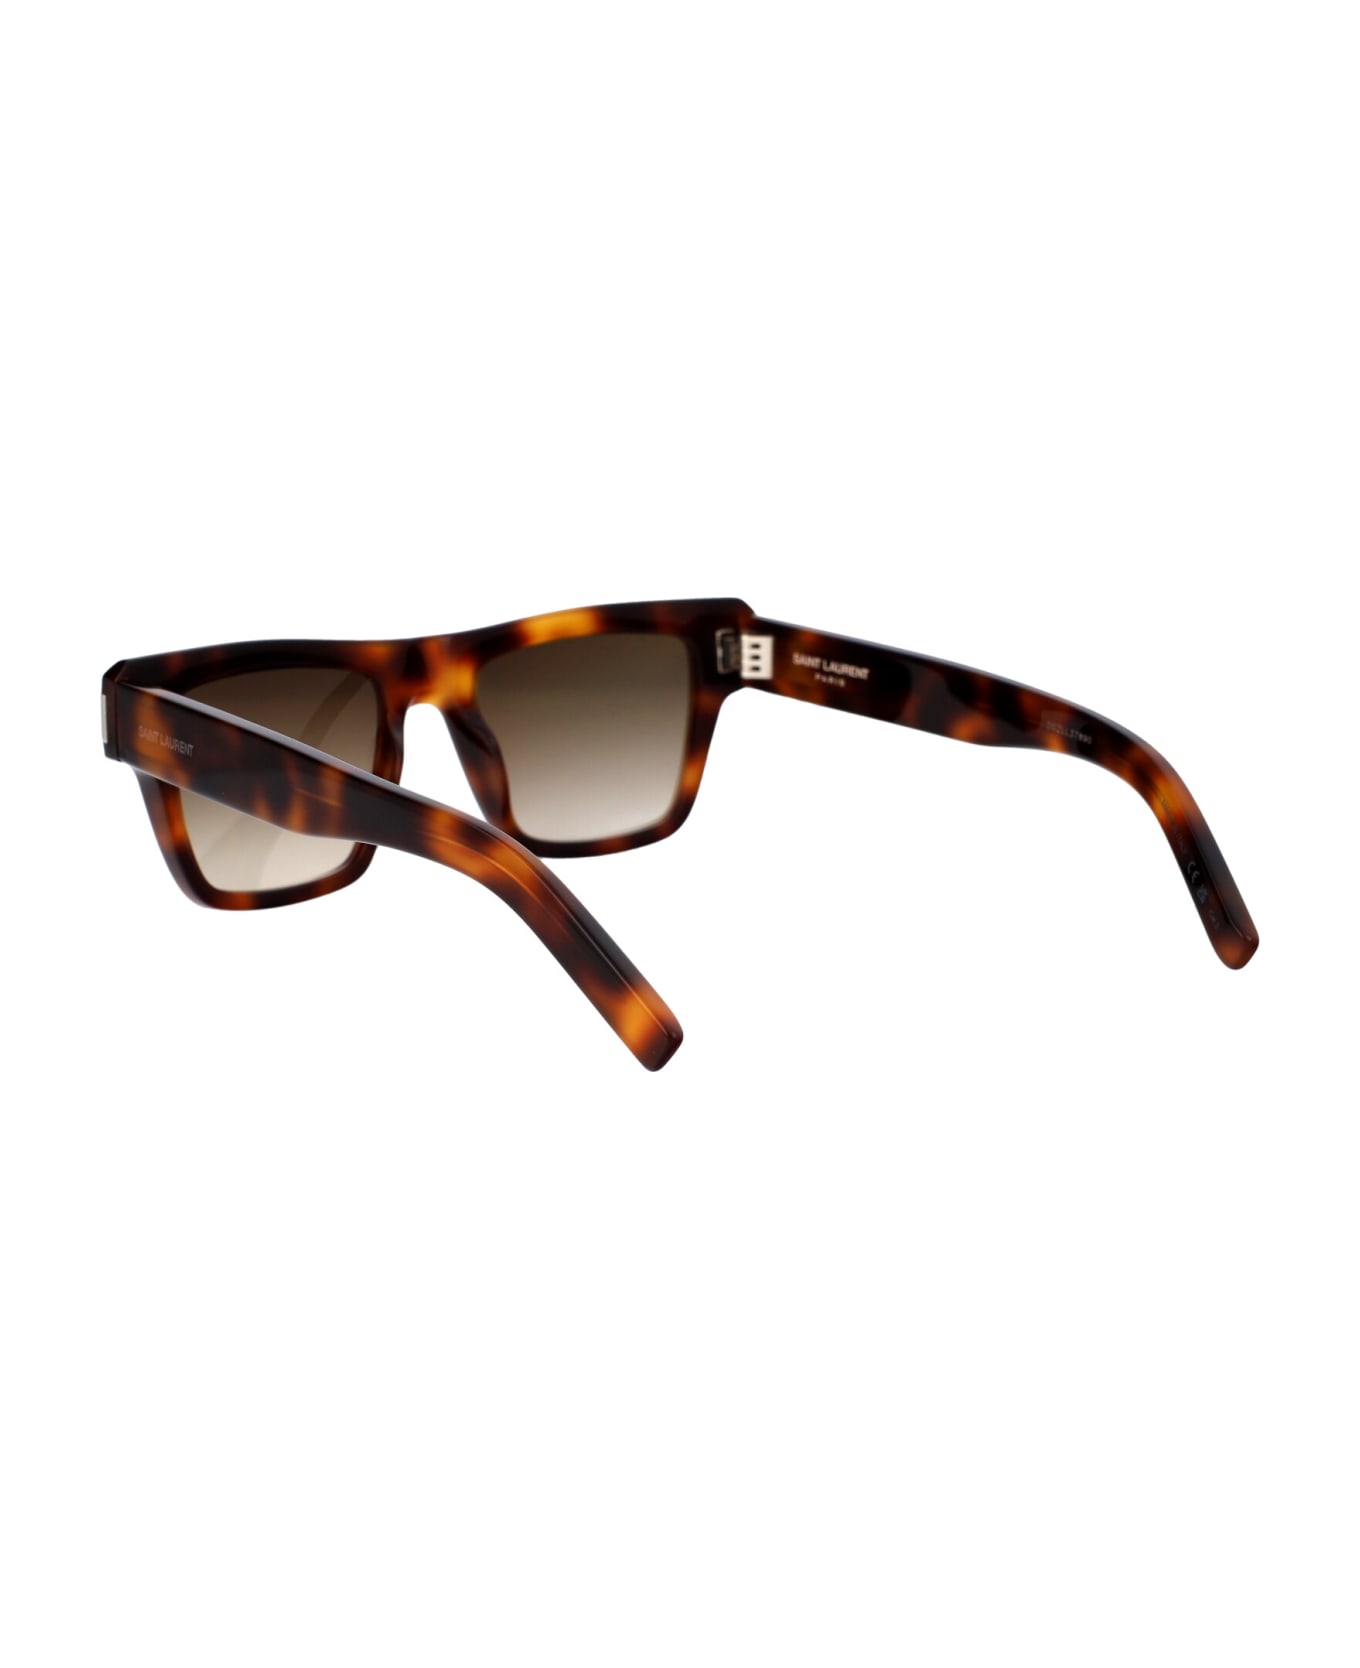 Saint Laurent Eyewear Sl 469 Sunglasses - 020 HAVANA HAVANA BROWN